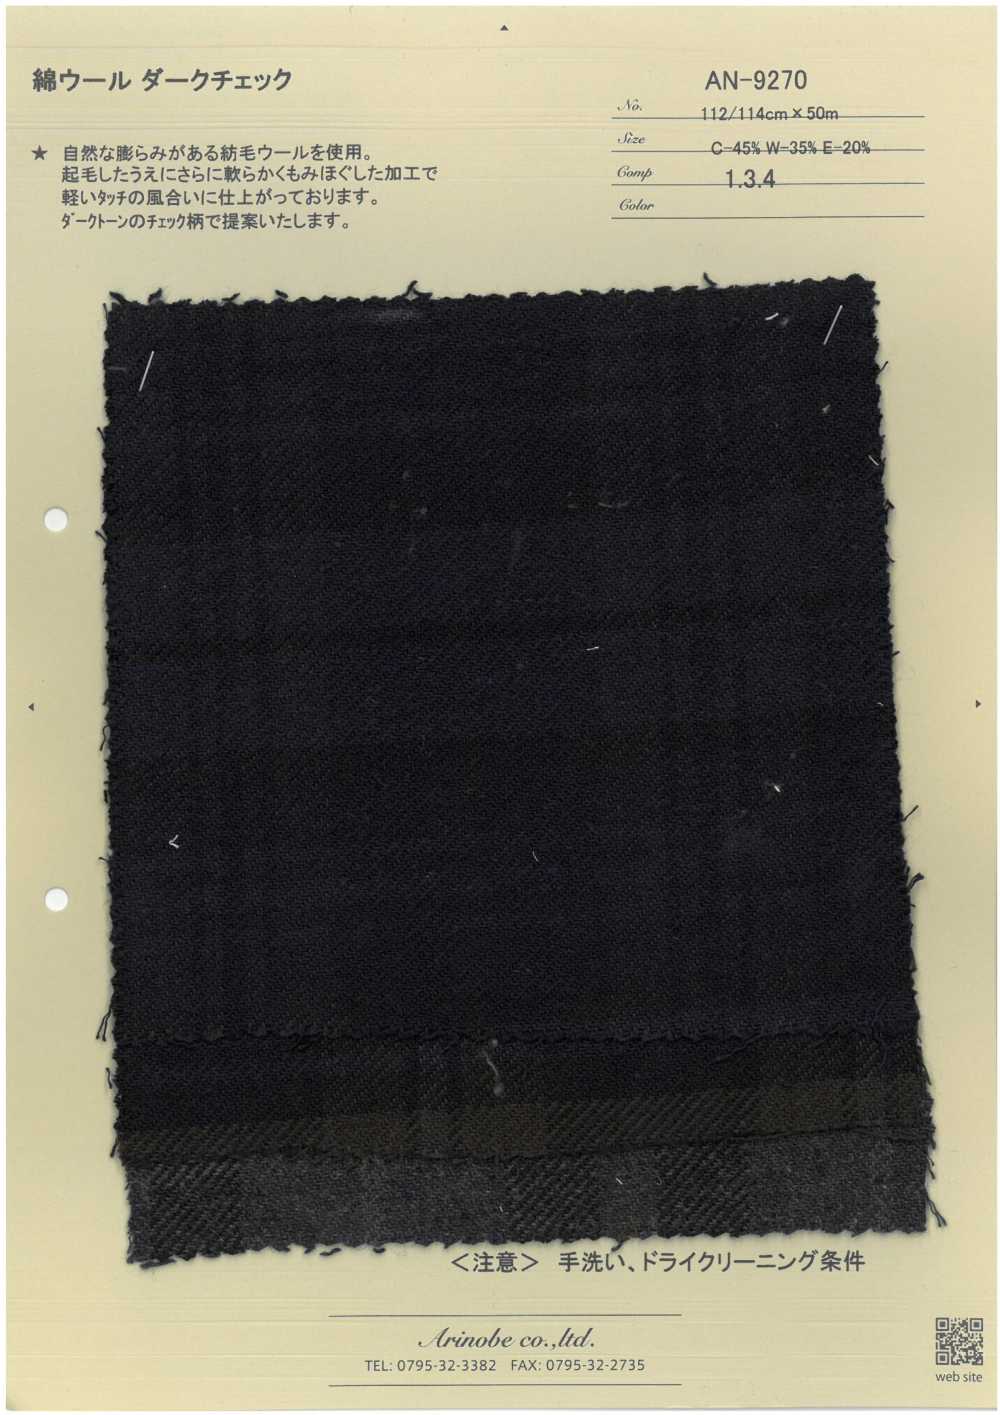 AN-9270 Algodón Lana Cuadros Oscuros[Fabrica Textil] ARINOBE CO., LTD.